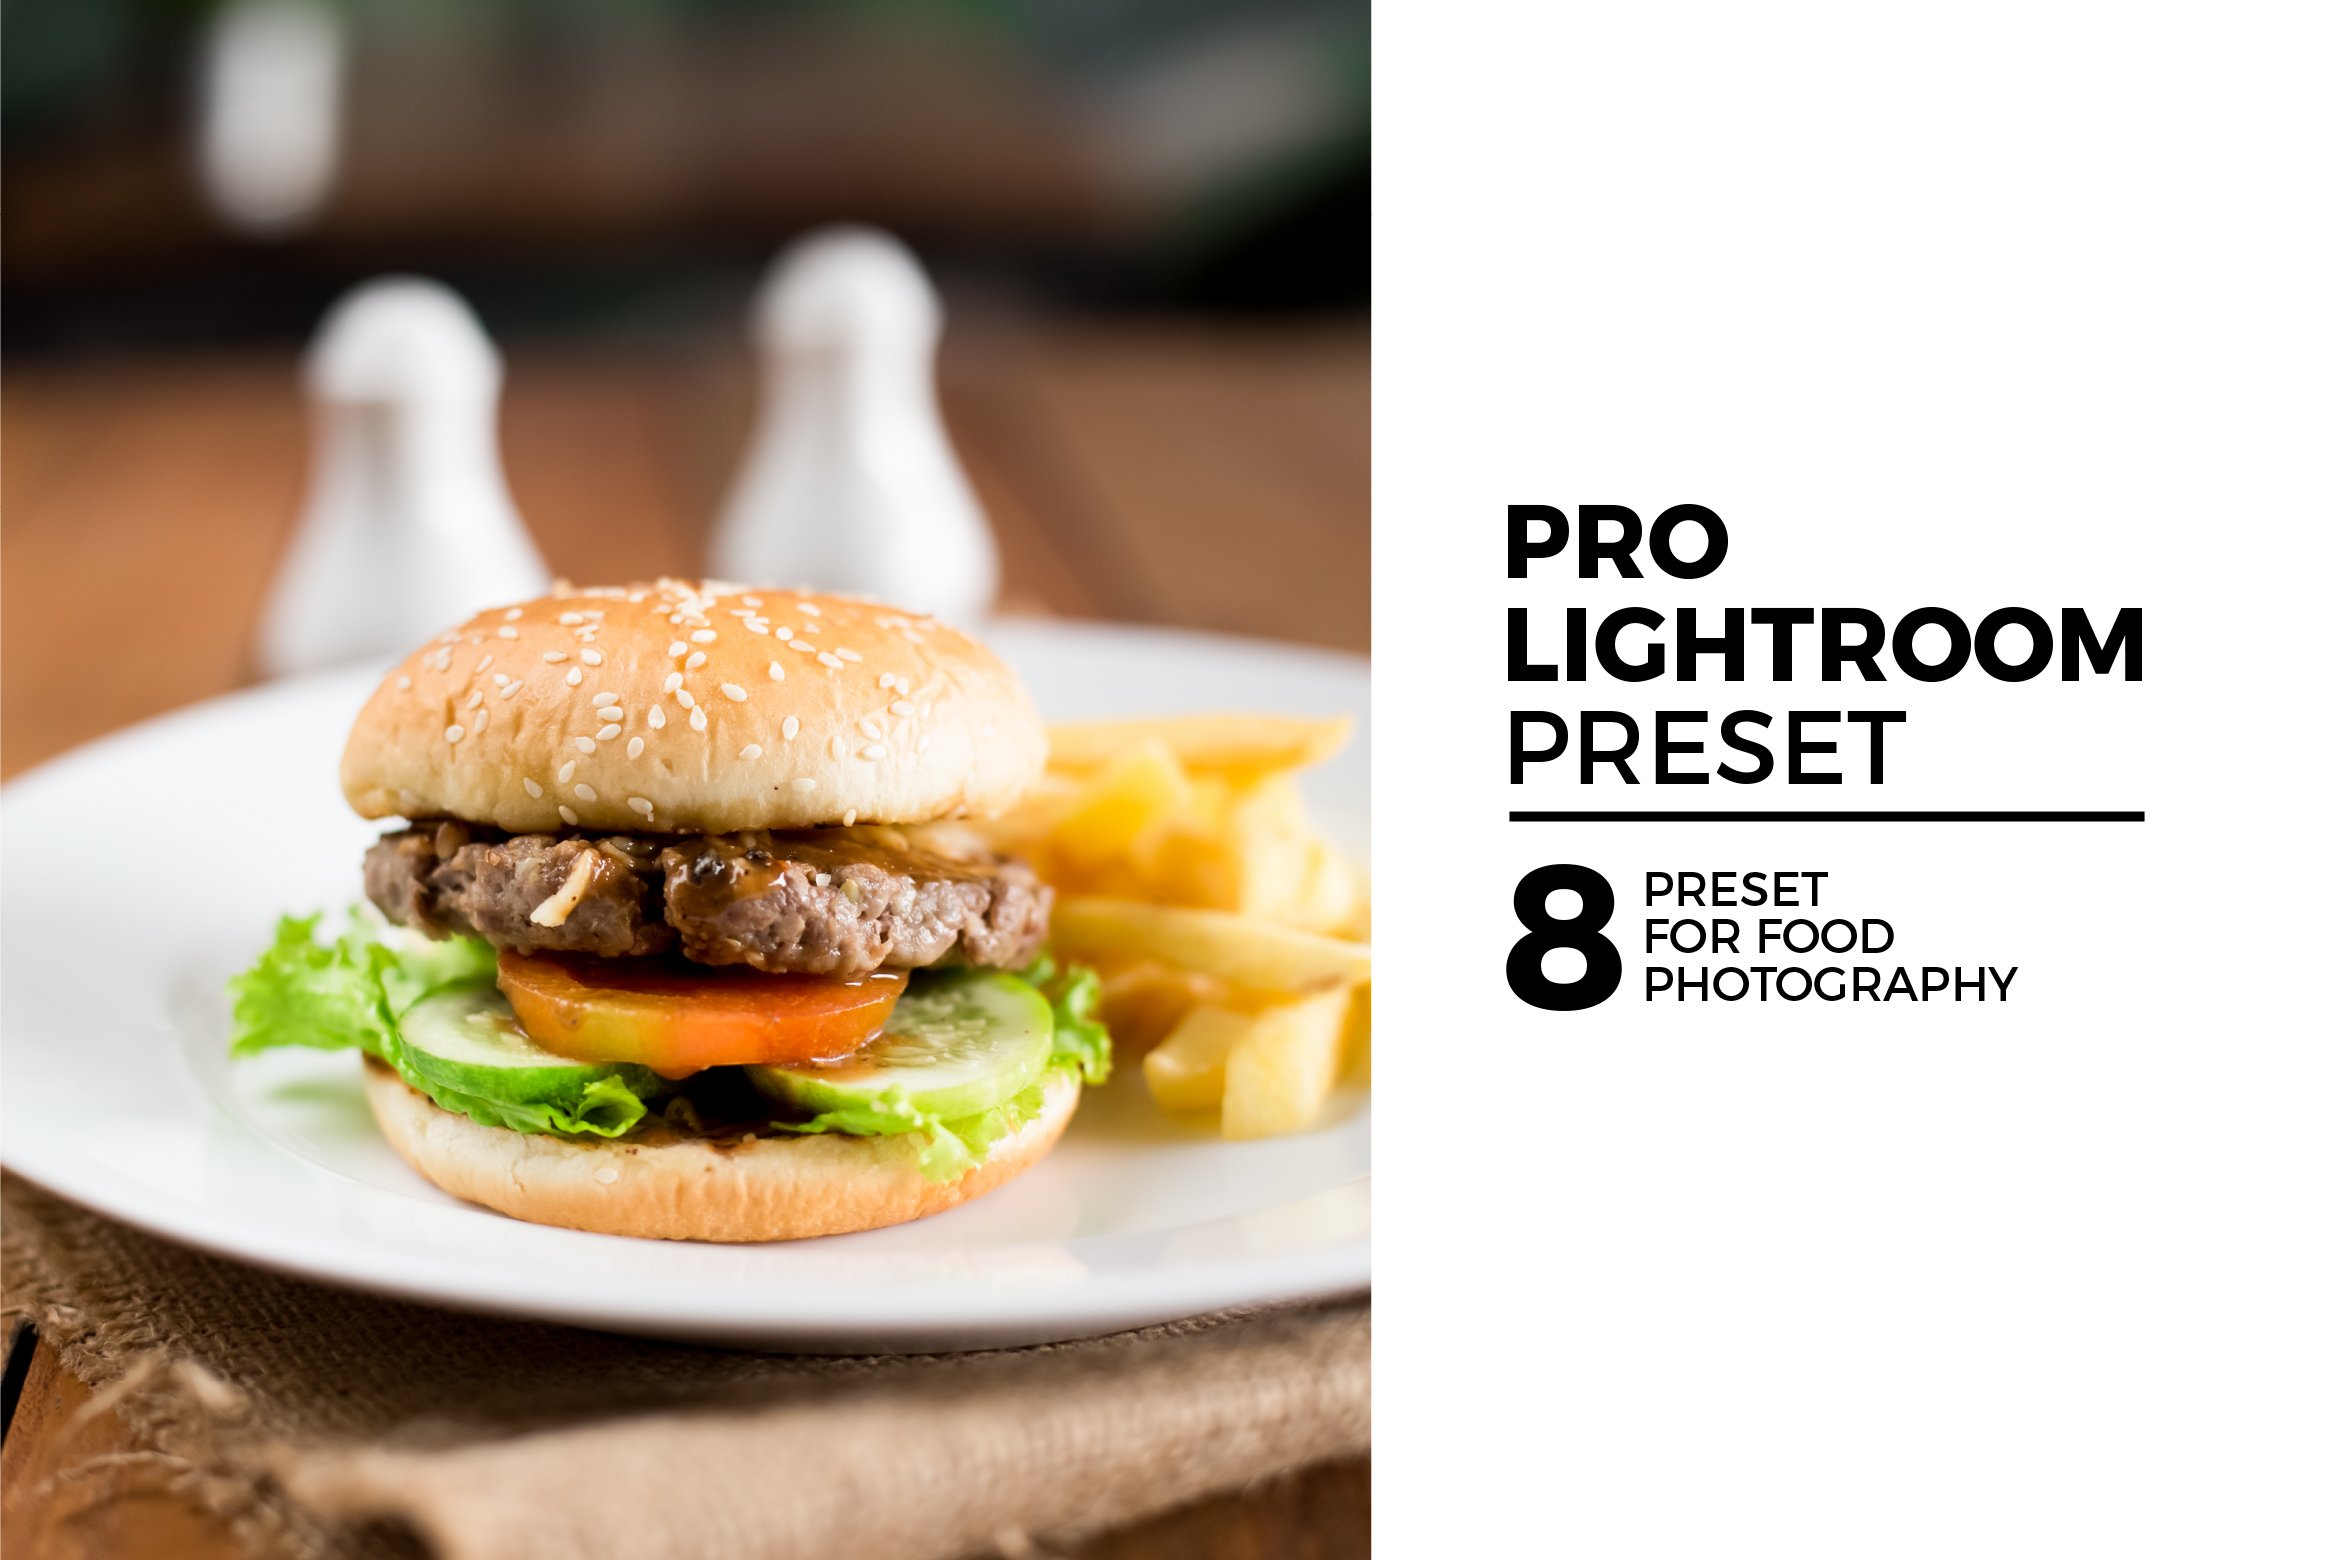 8 Pro Lightroom Preset for Food Photcover image.